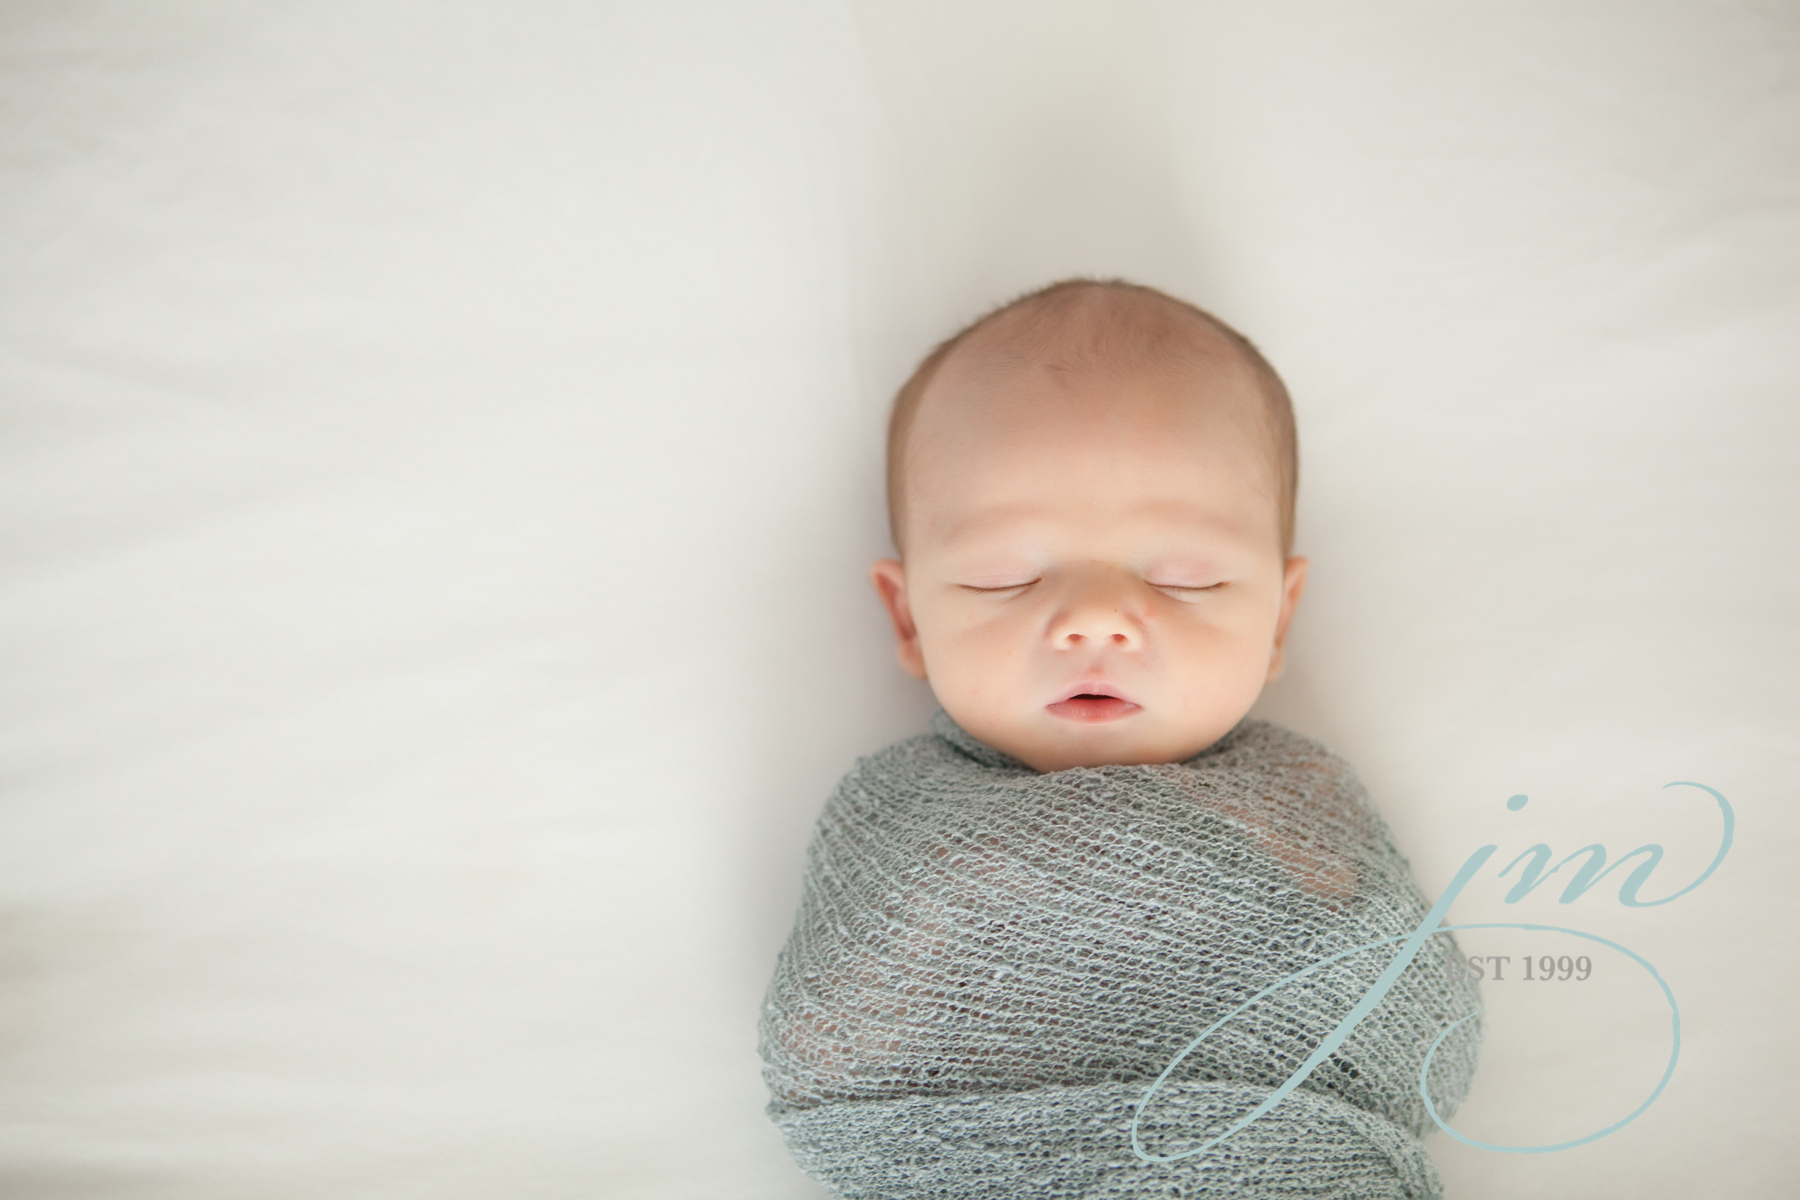 in-home-newborn-photos